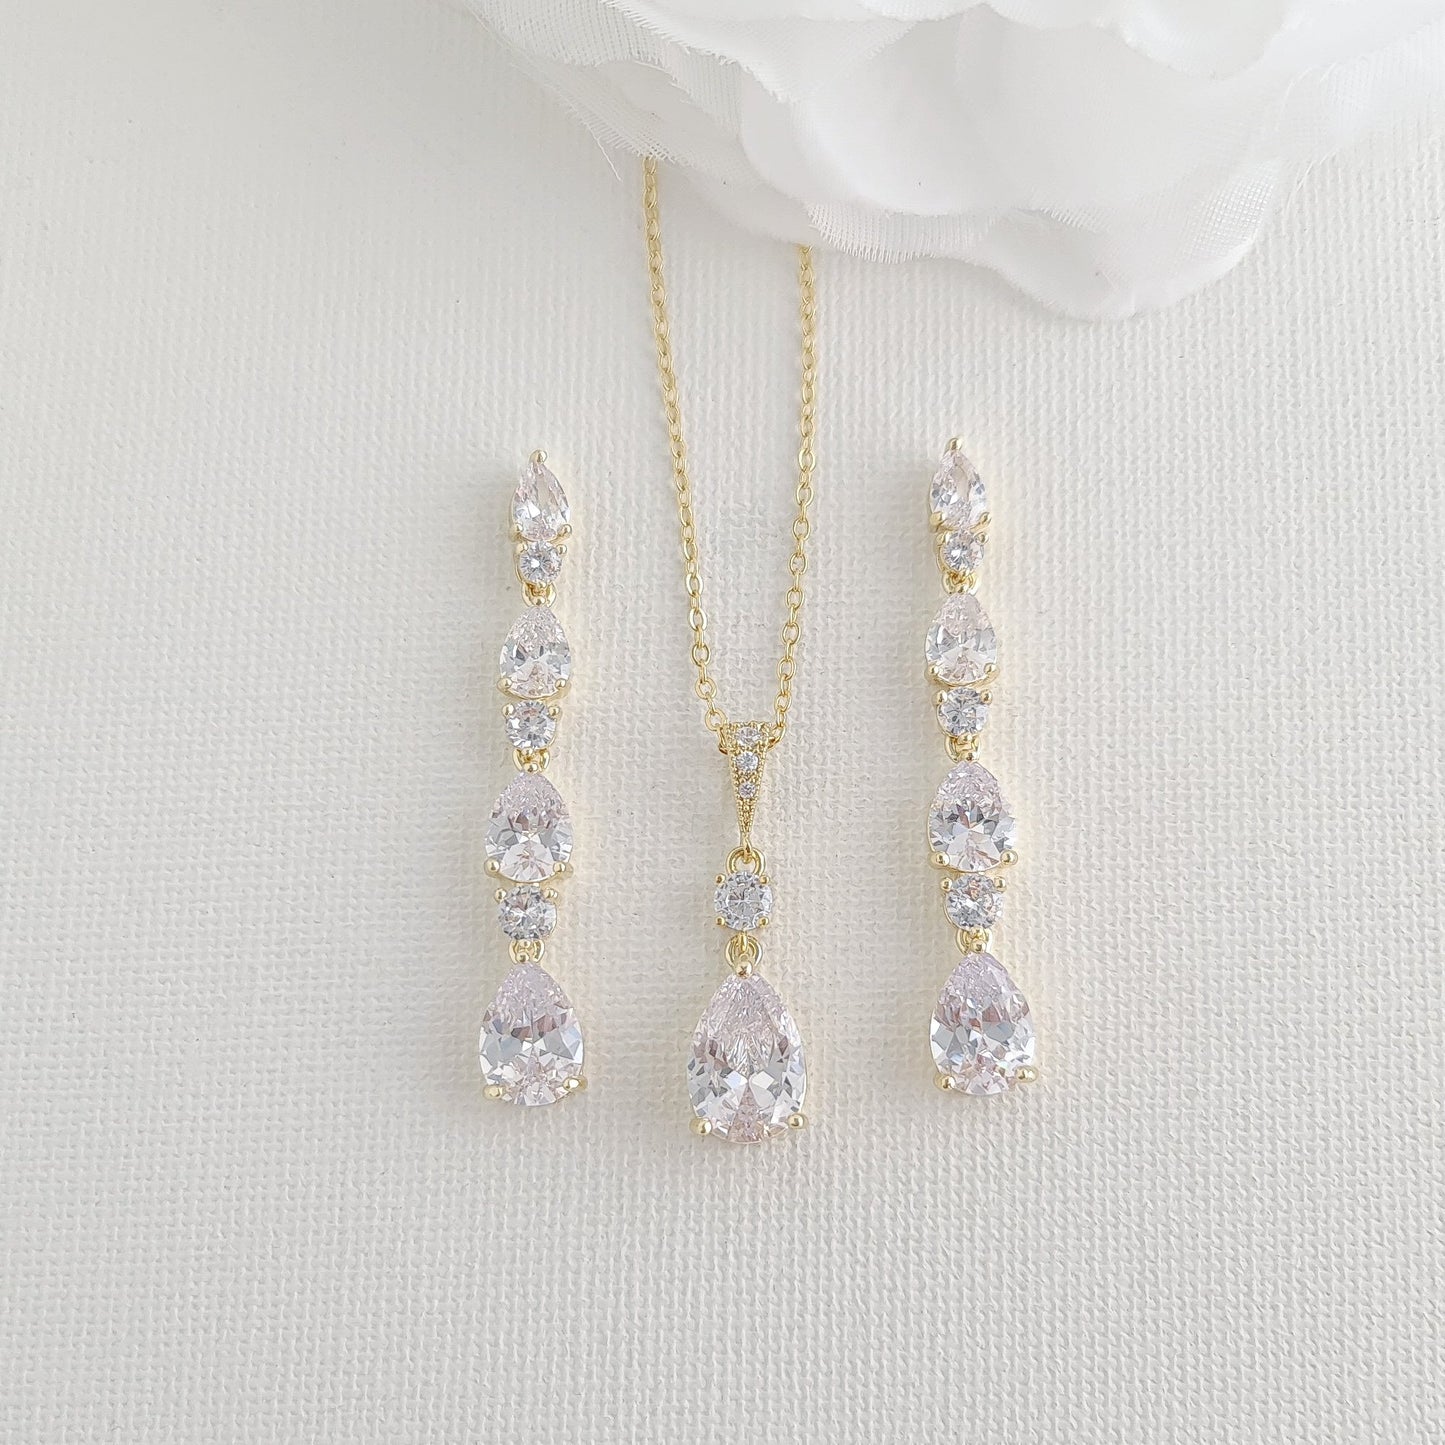 Drop Pendant Necklace and Earrings Wedding Jewelry Set-Hazel